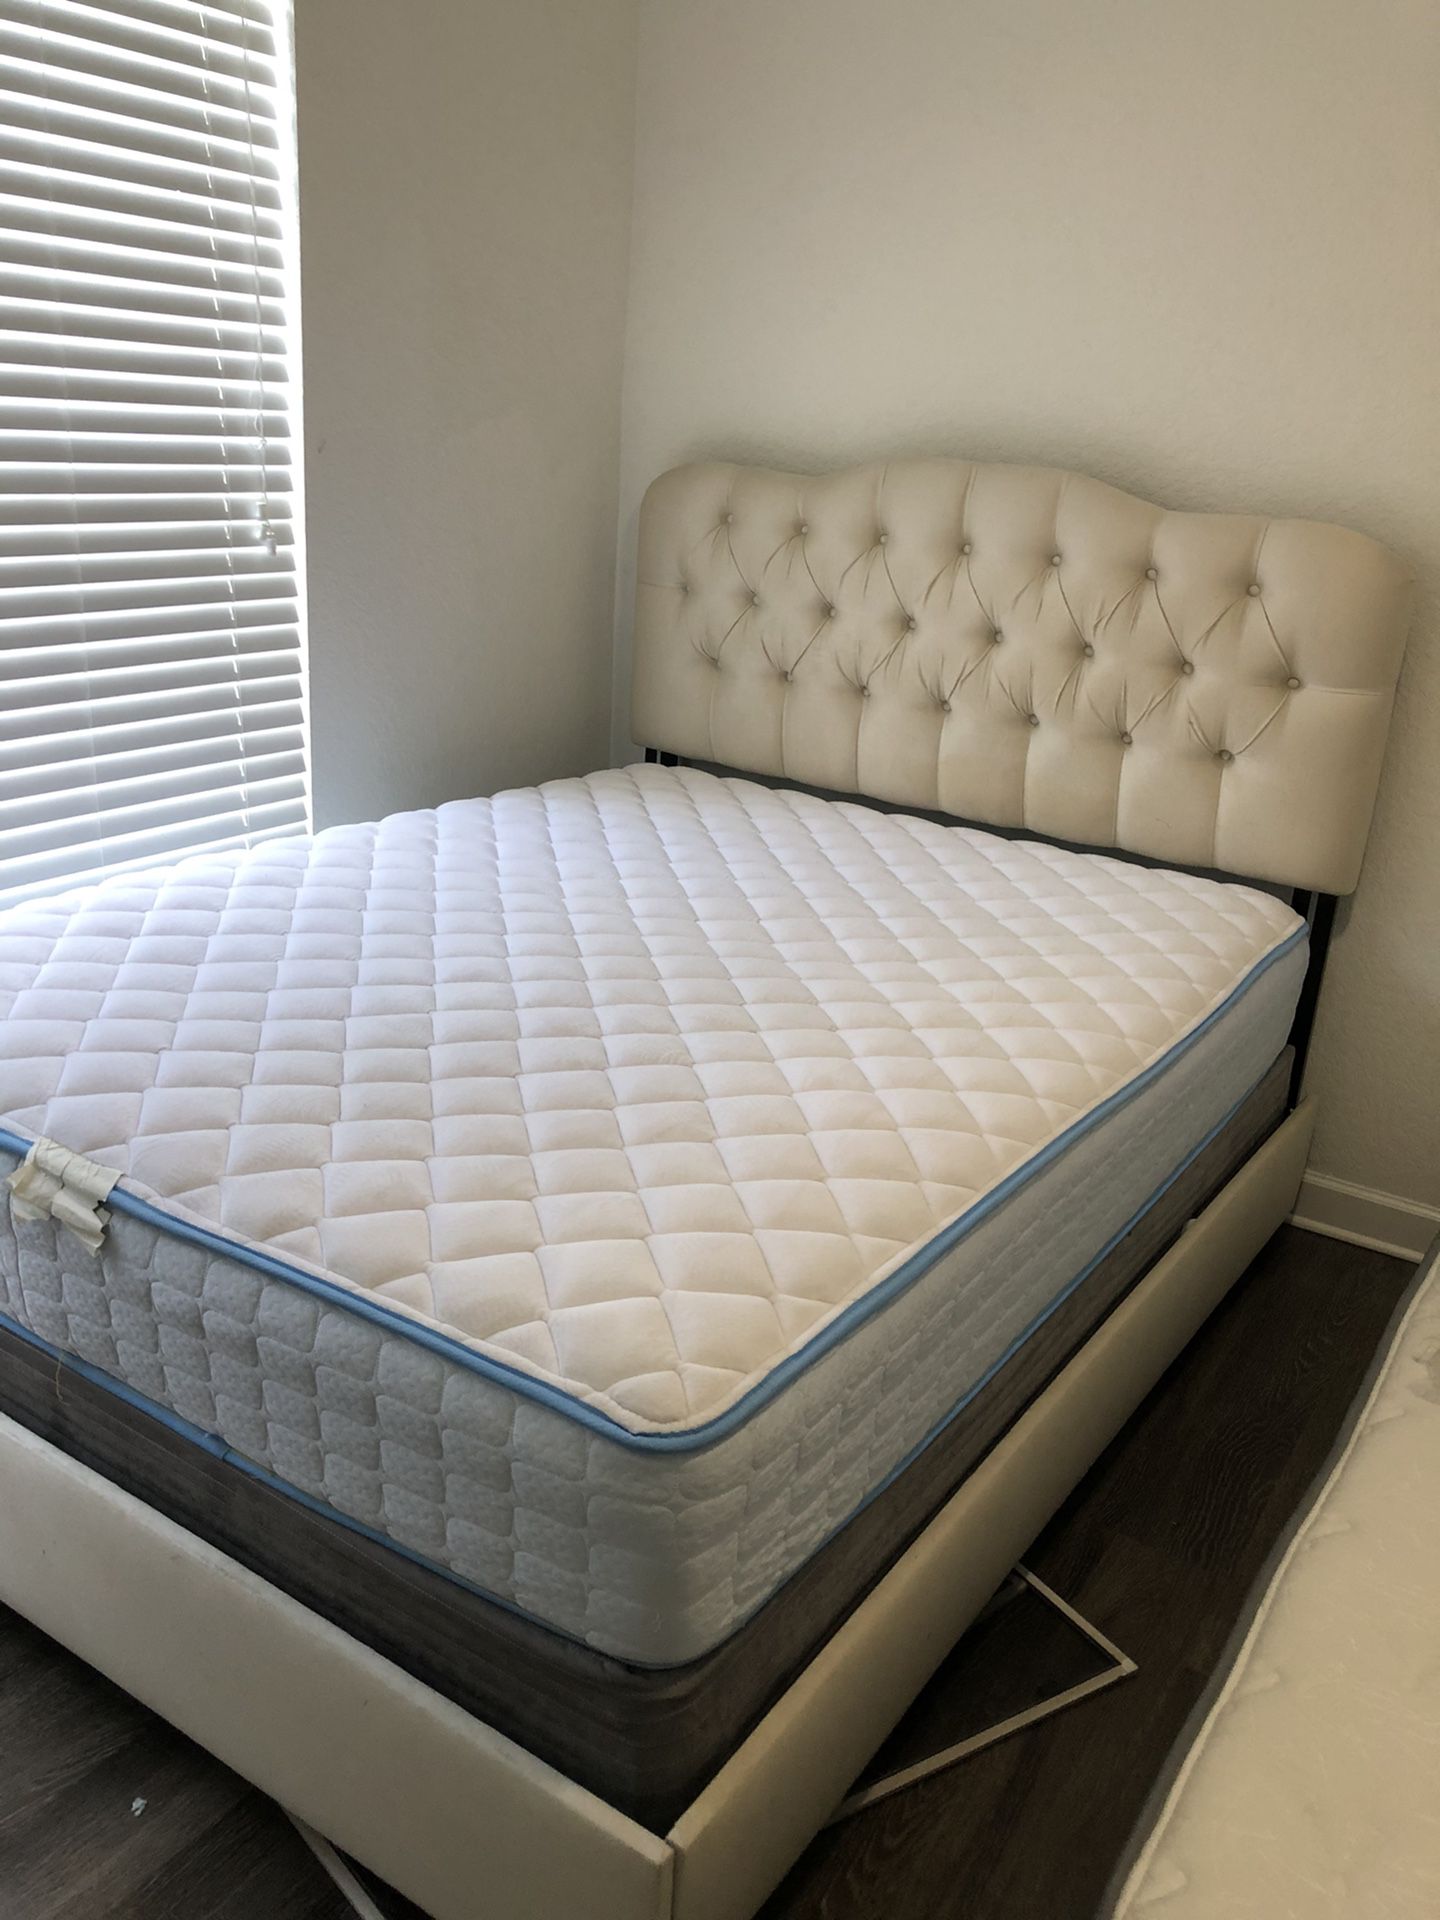 Queen mattress and frame (FREE)